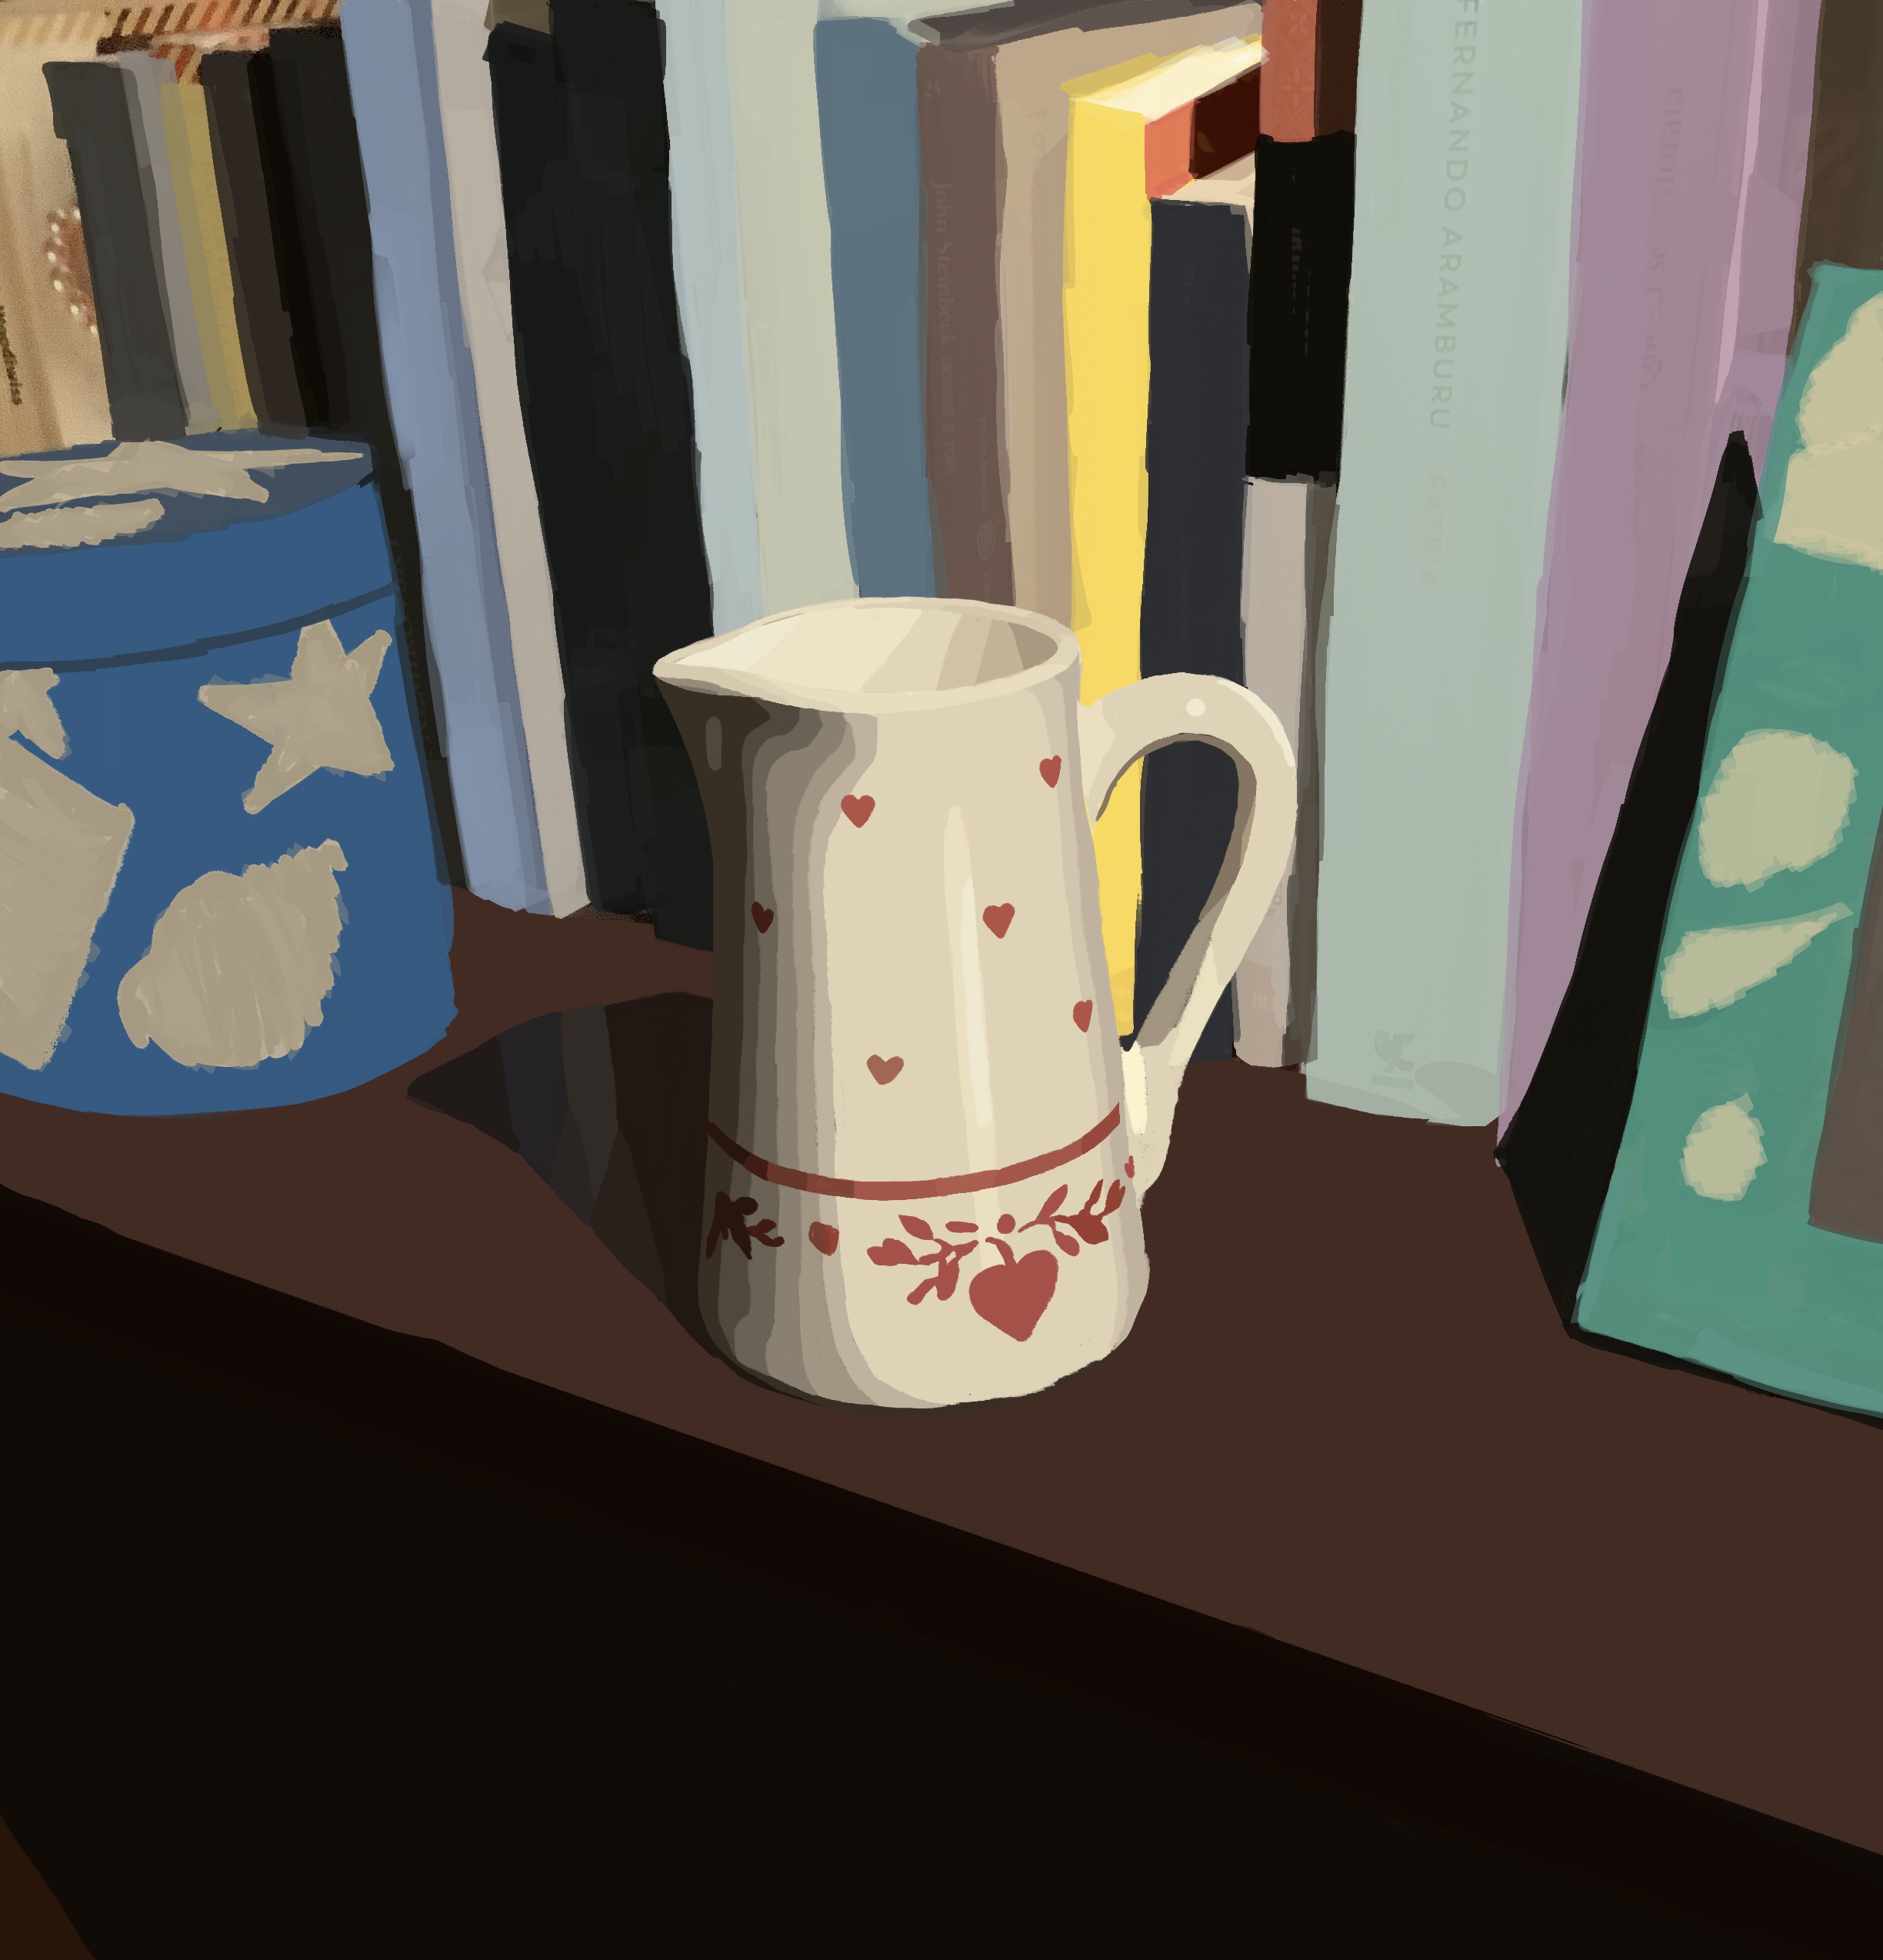 Semi—realistic still life of a white cup